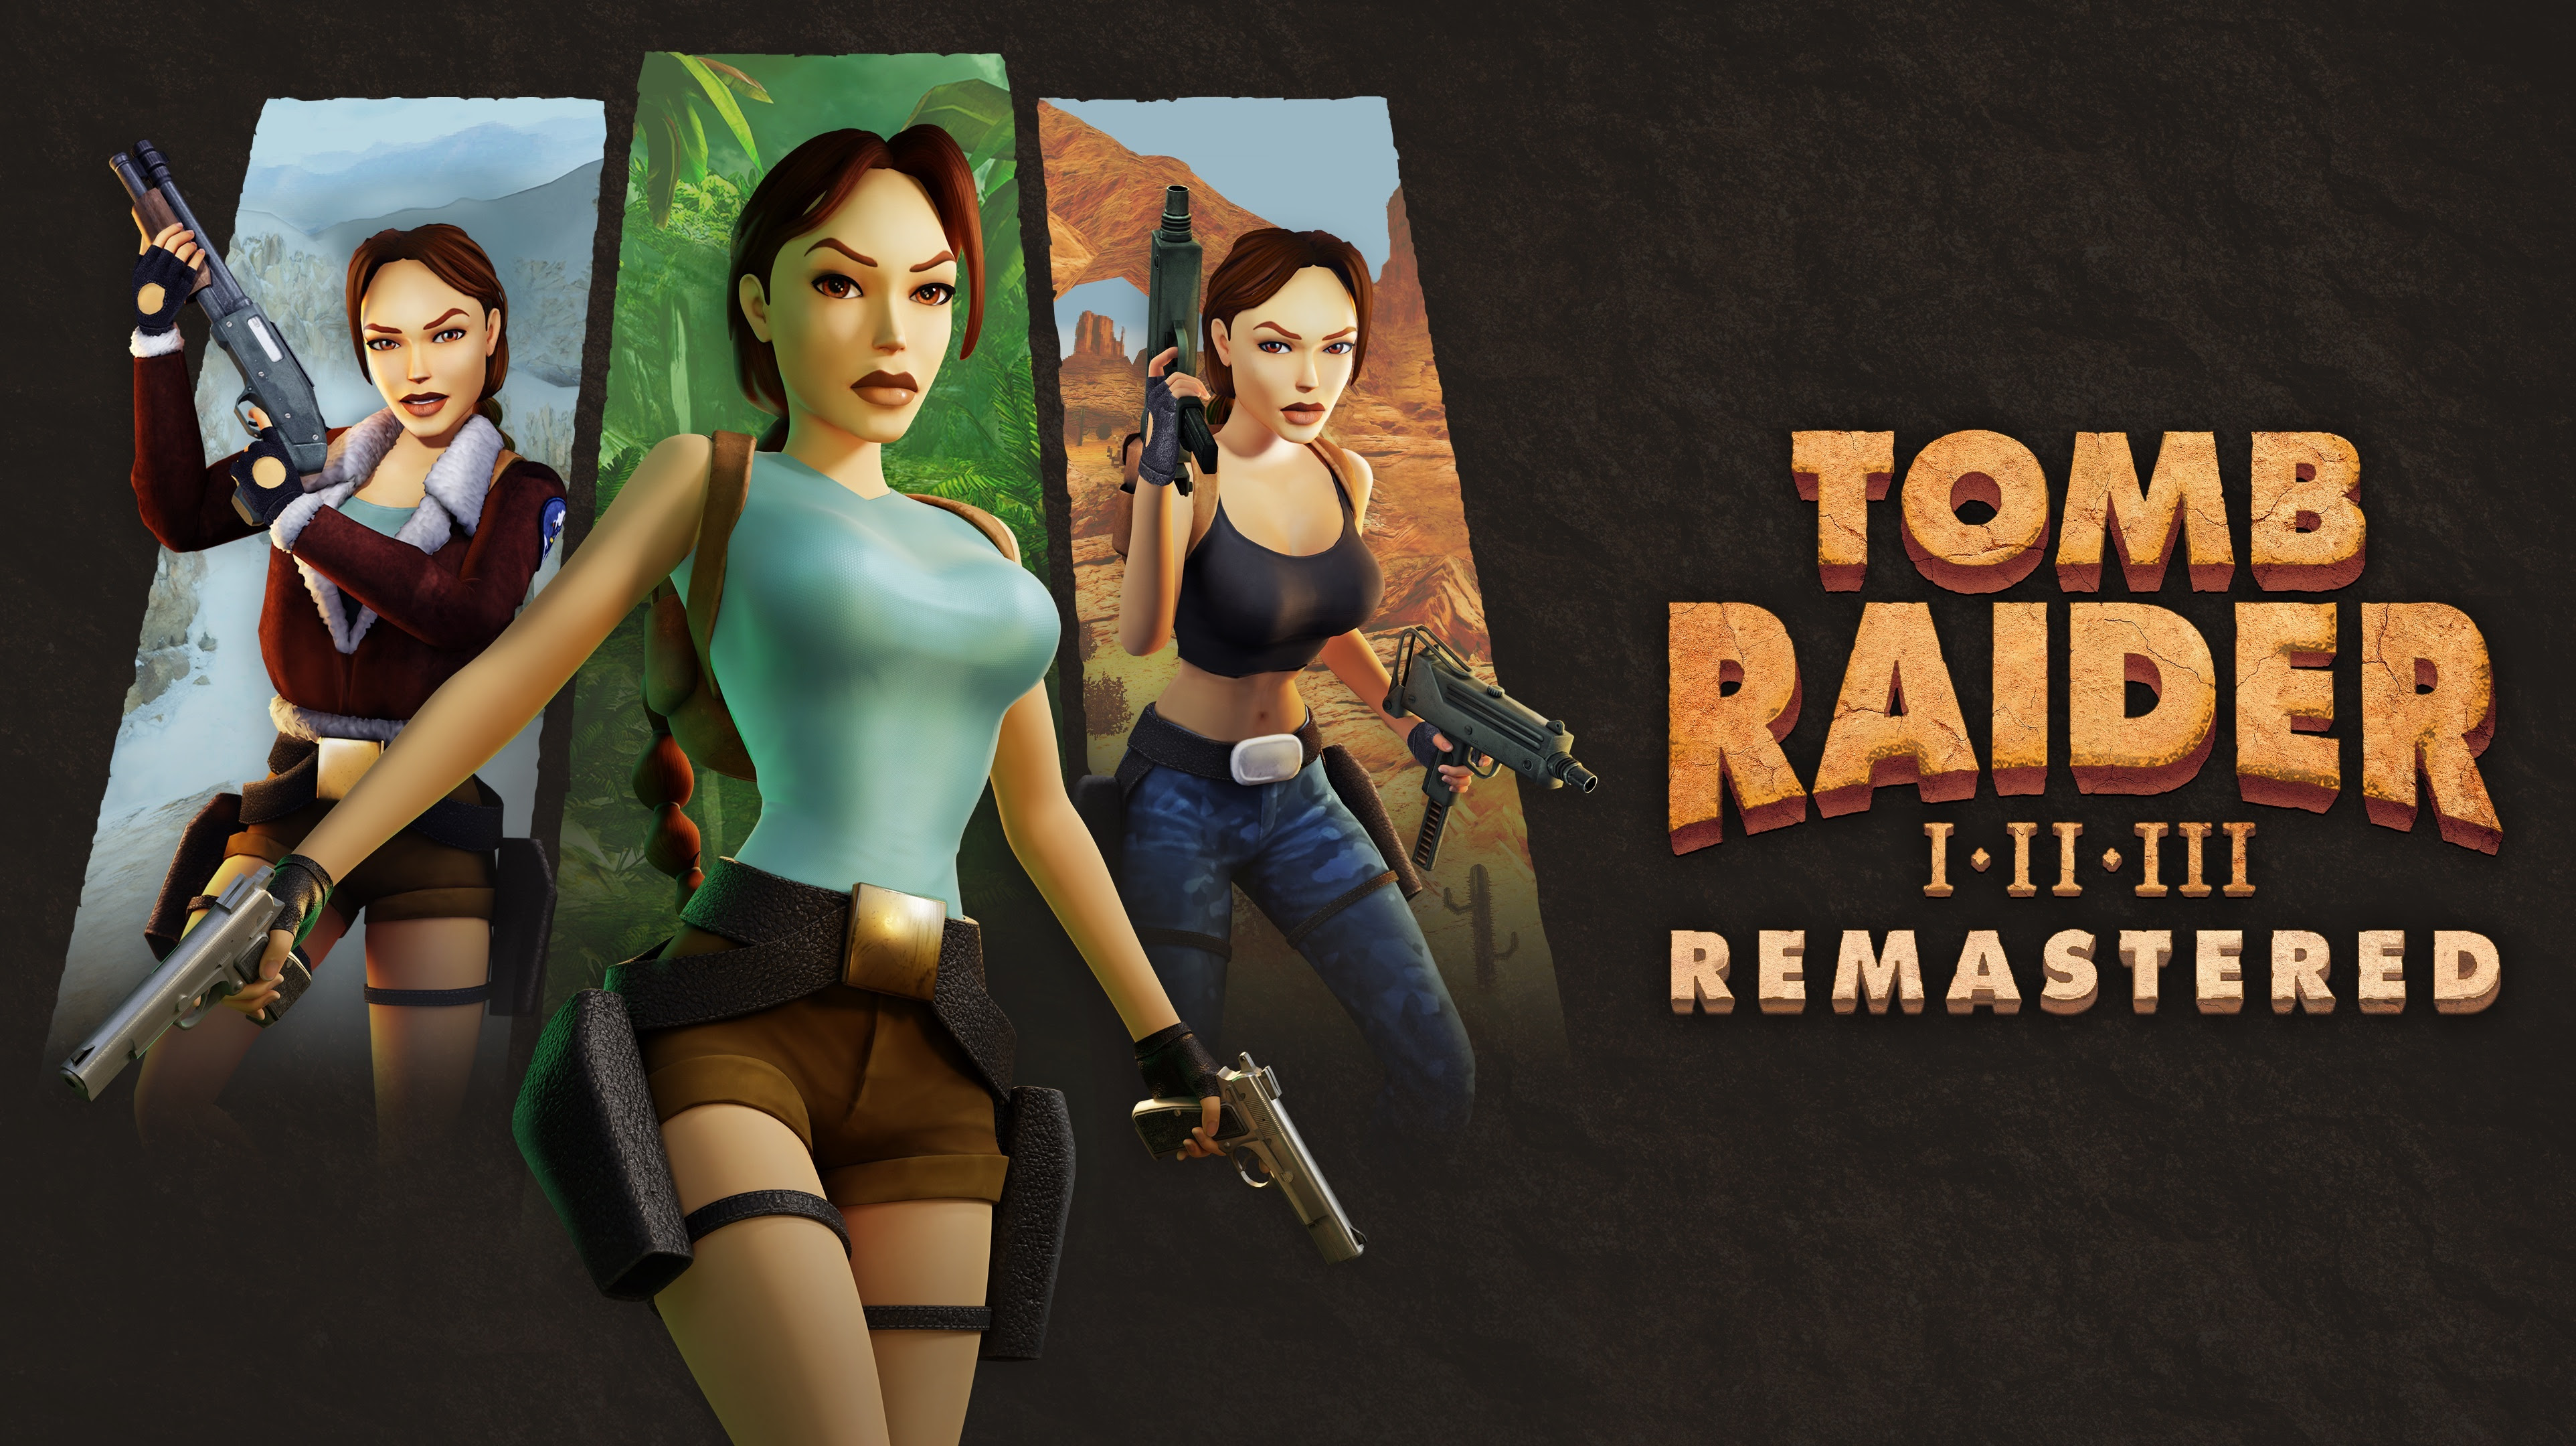 Jogos: Tomb Raider Remastered I-III Starring Lara Croft &#124; Review